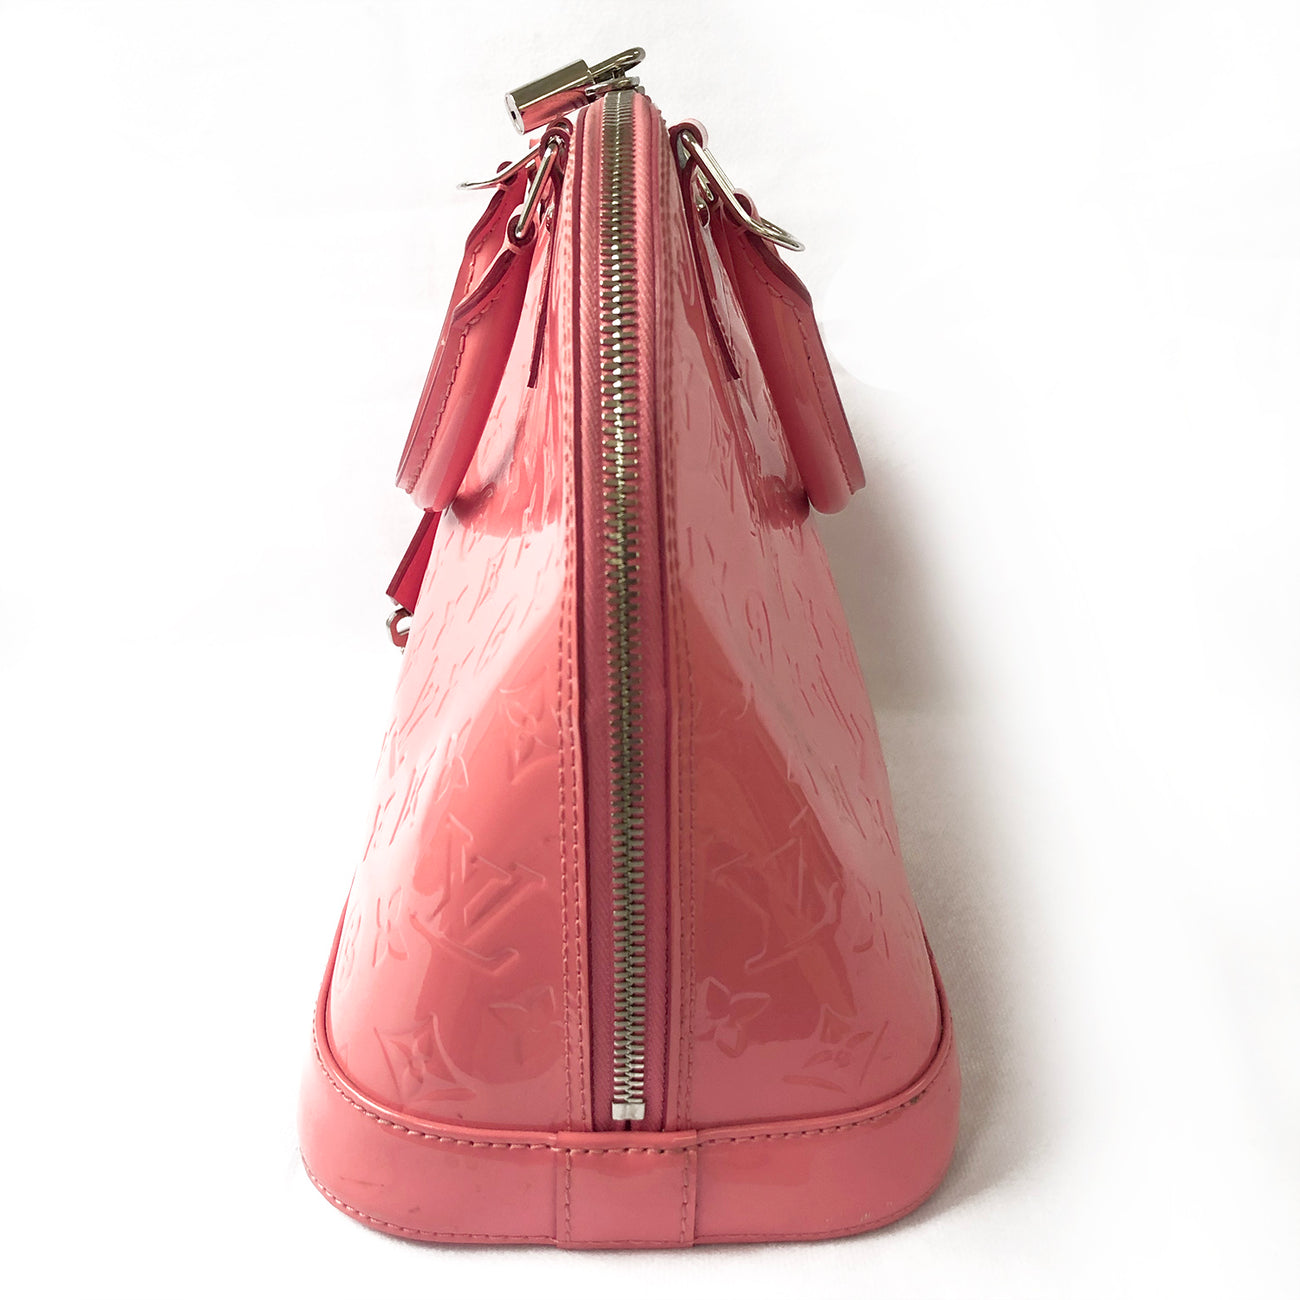 Louis Vuitton Alma Rose Pop Monogram Vernis Gm 3lt922 Pink Patent